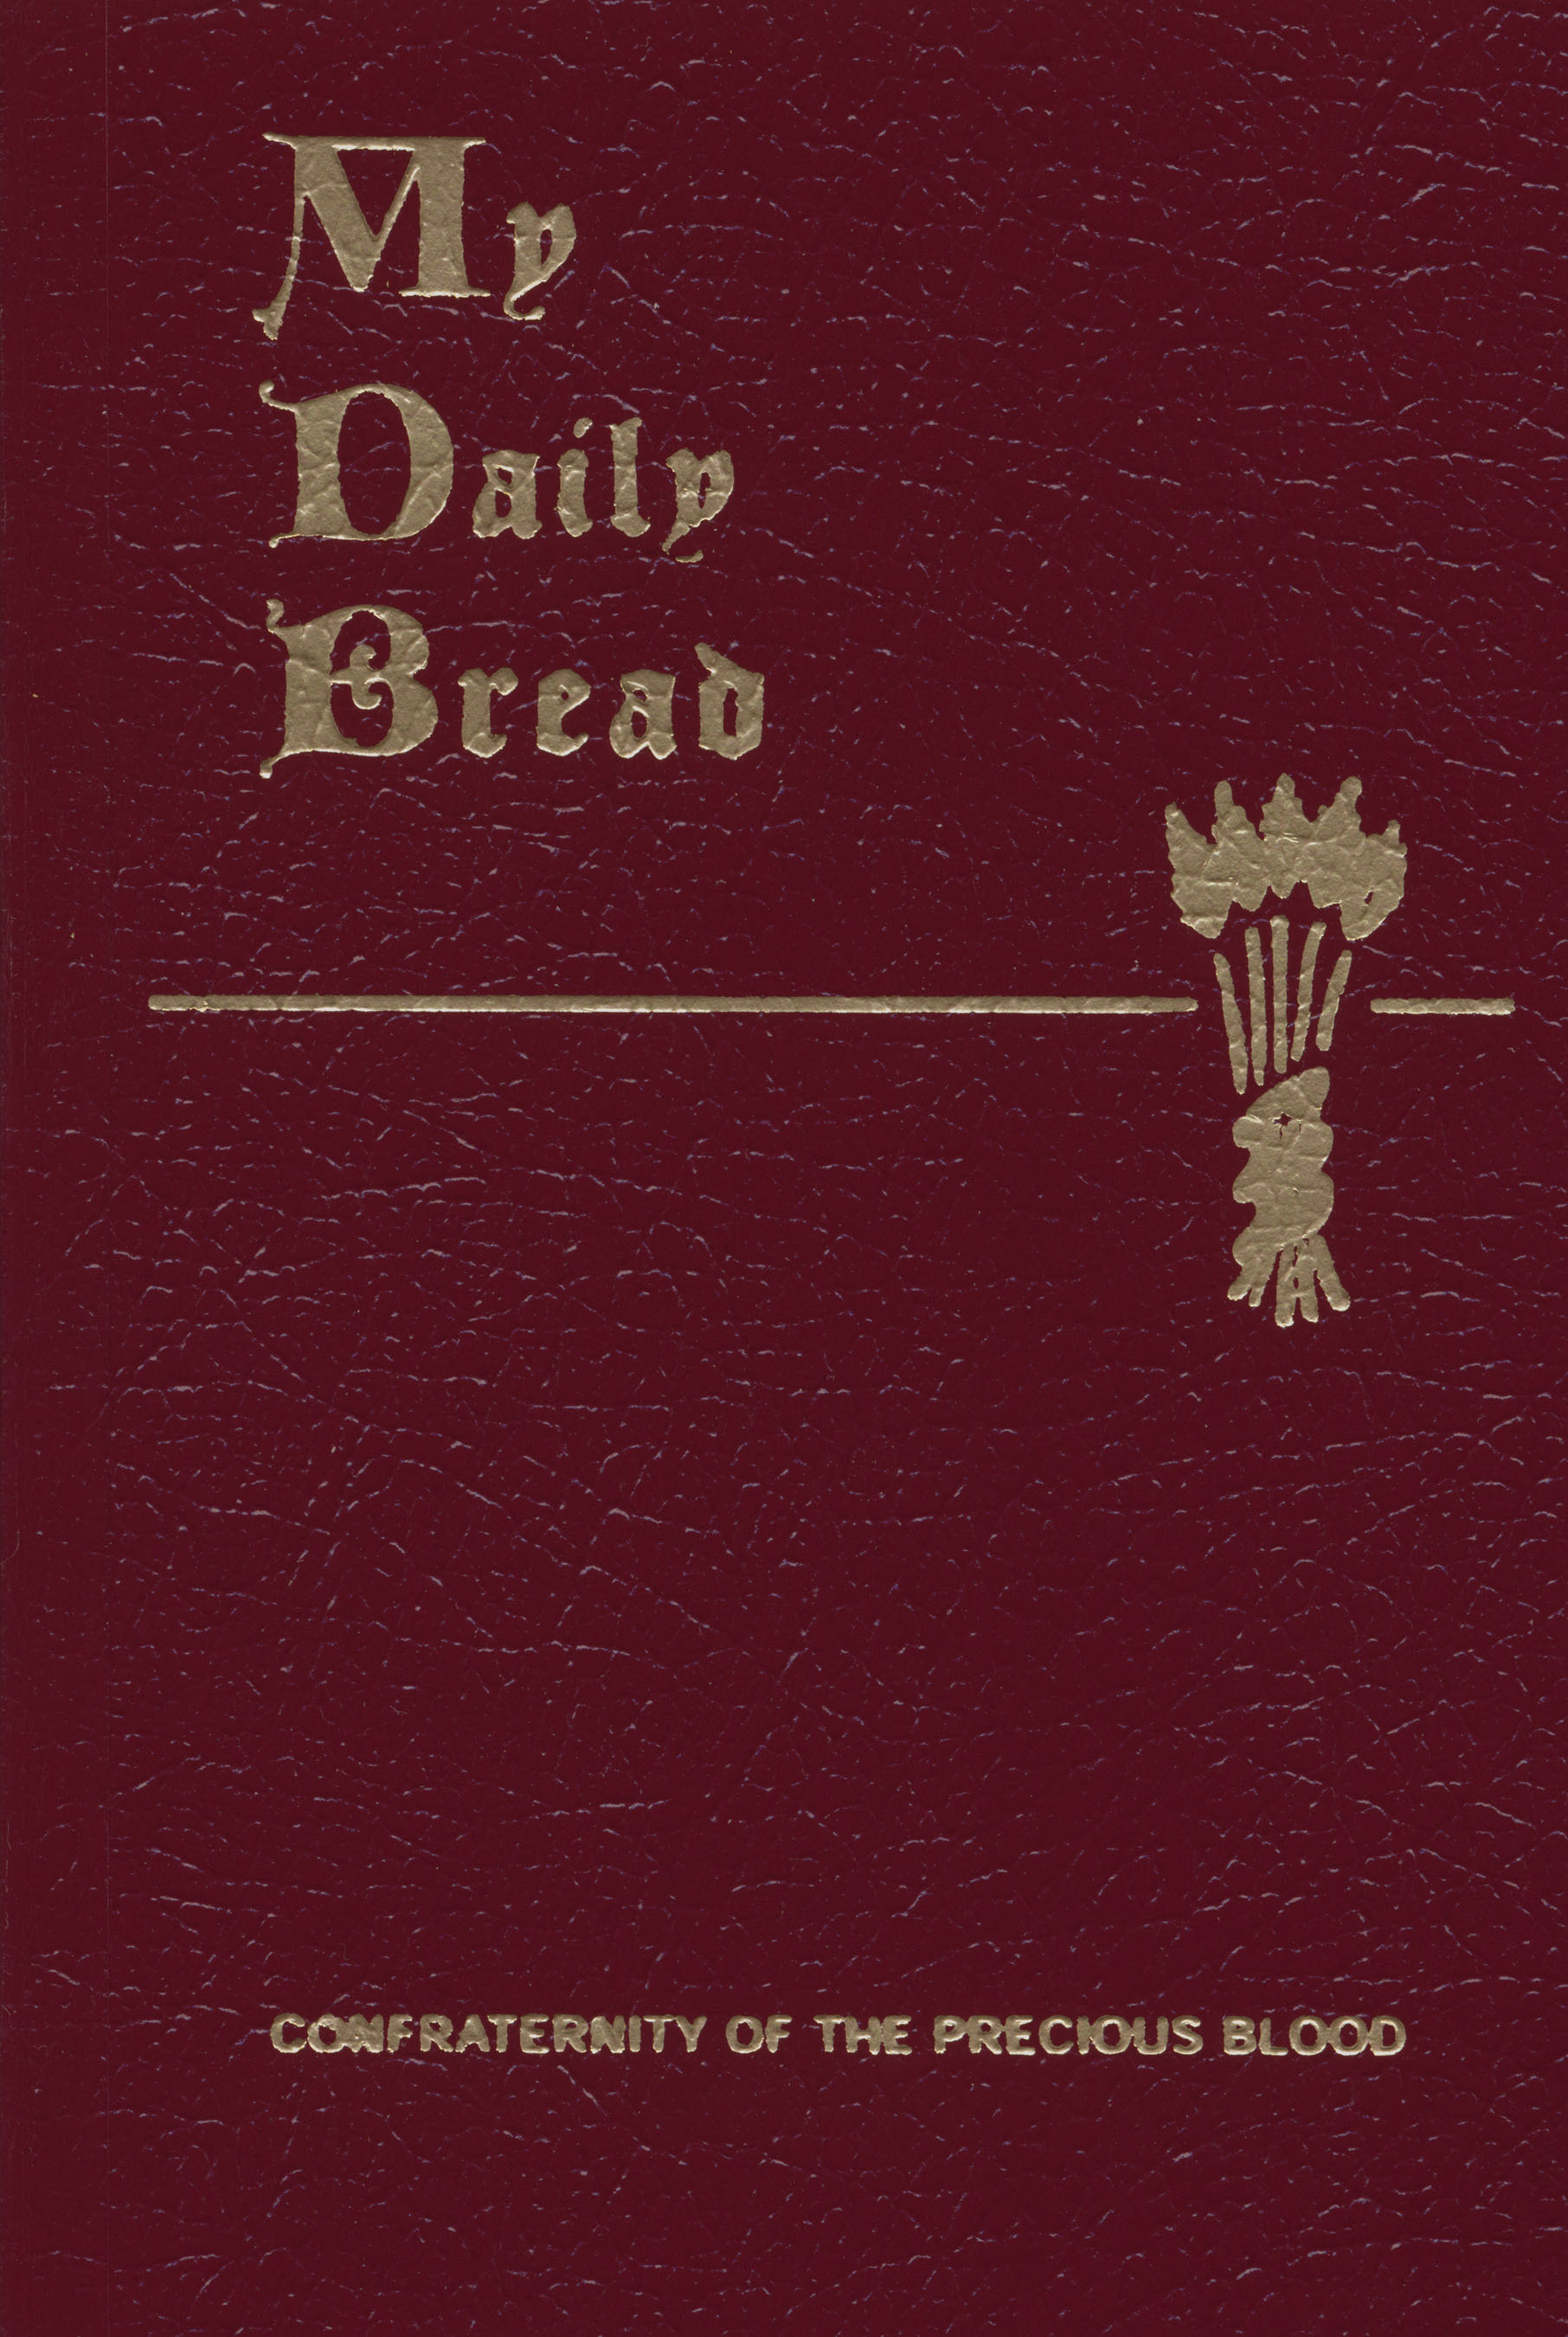 My Daily Bread, over 1 million copies sold (PRNewsFoto/TAN Books)